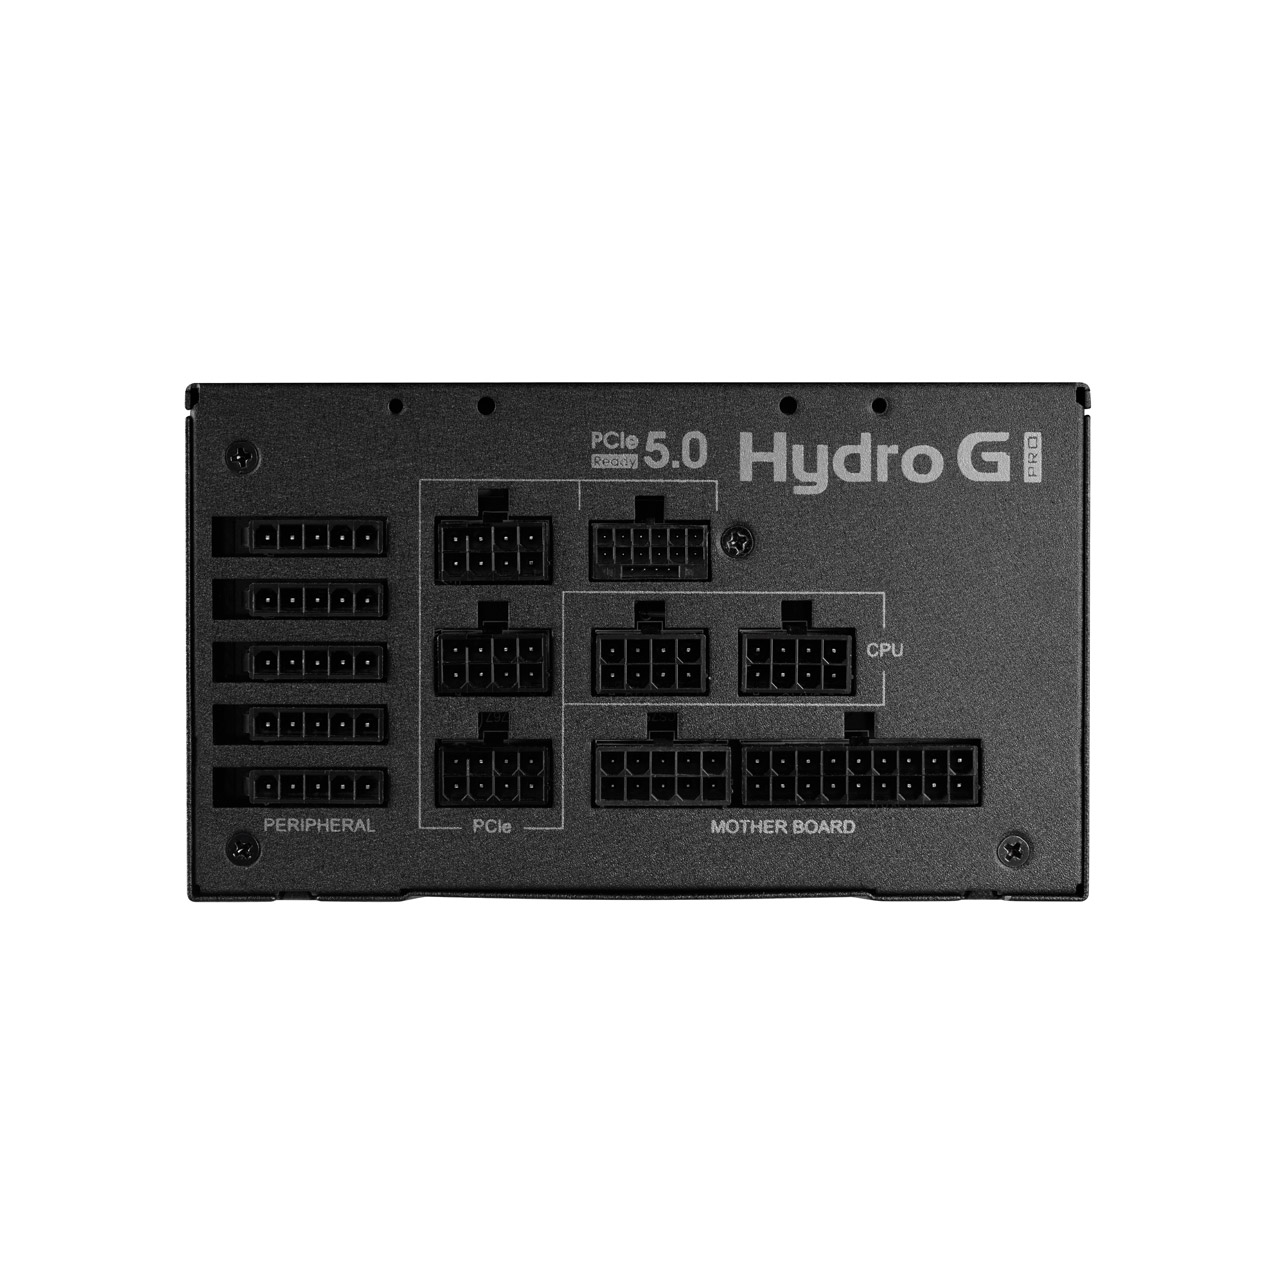 FSP Fortron Hydro G2 Pro 850 (80+ Gold) 850W Modular PC-Netzteil ATX 3.0 / PCIe 5.0